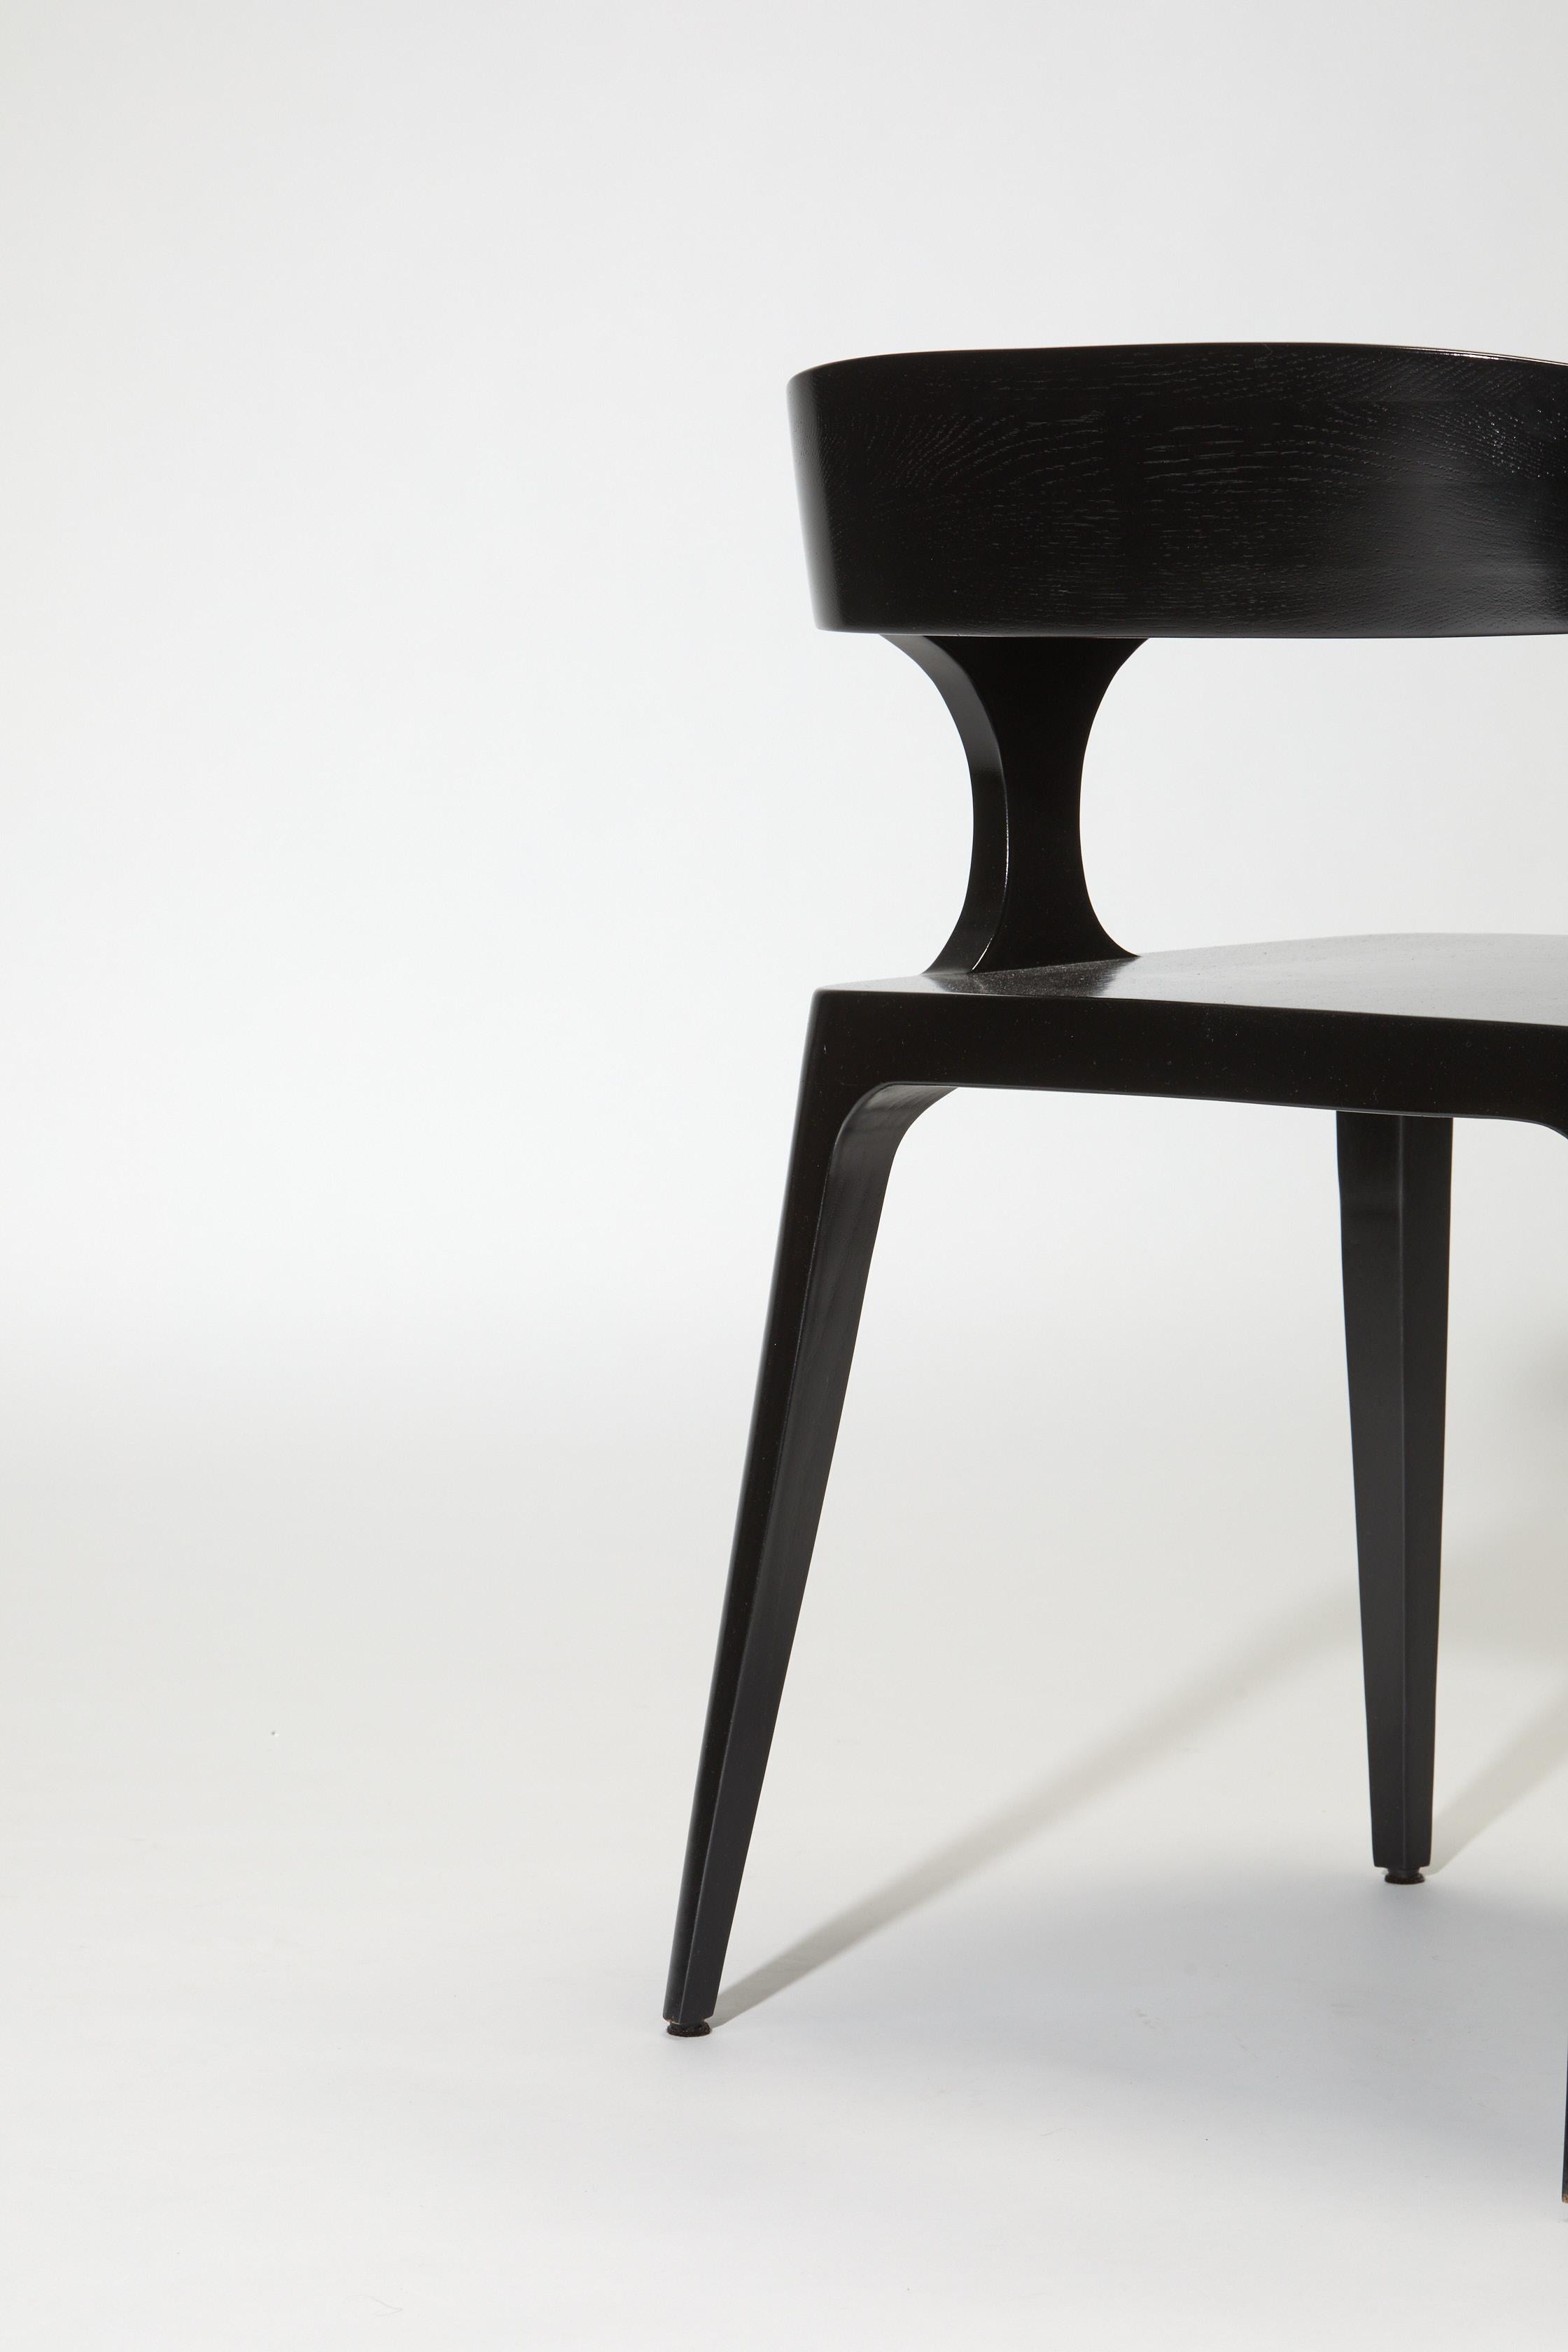 Vietnamese Chair, EILEEN, by Reda Amalou Design, 2020, Blackened Ash